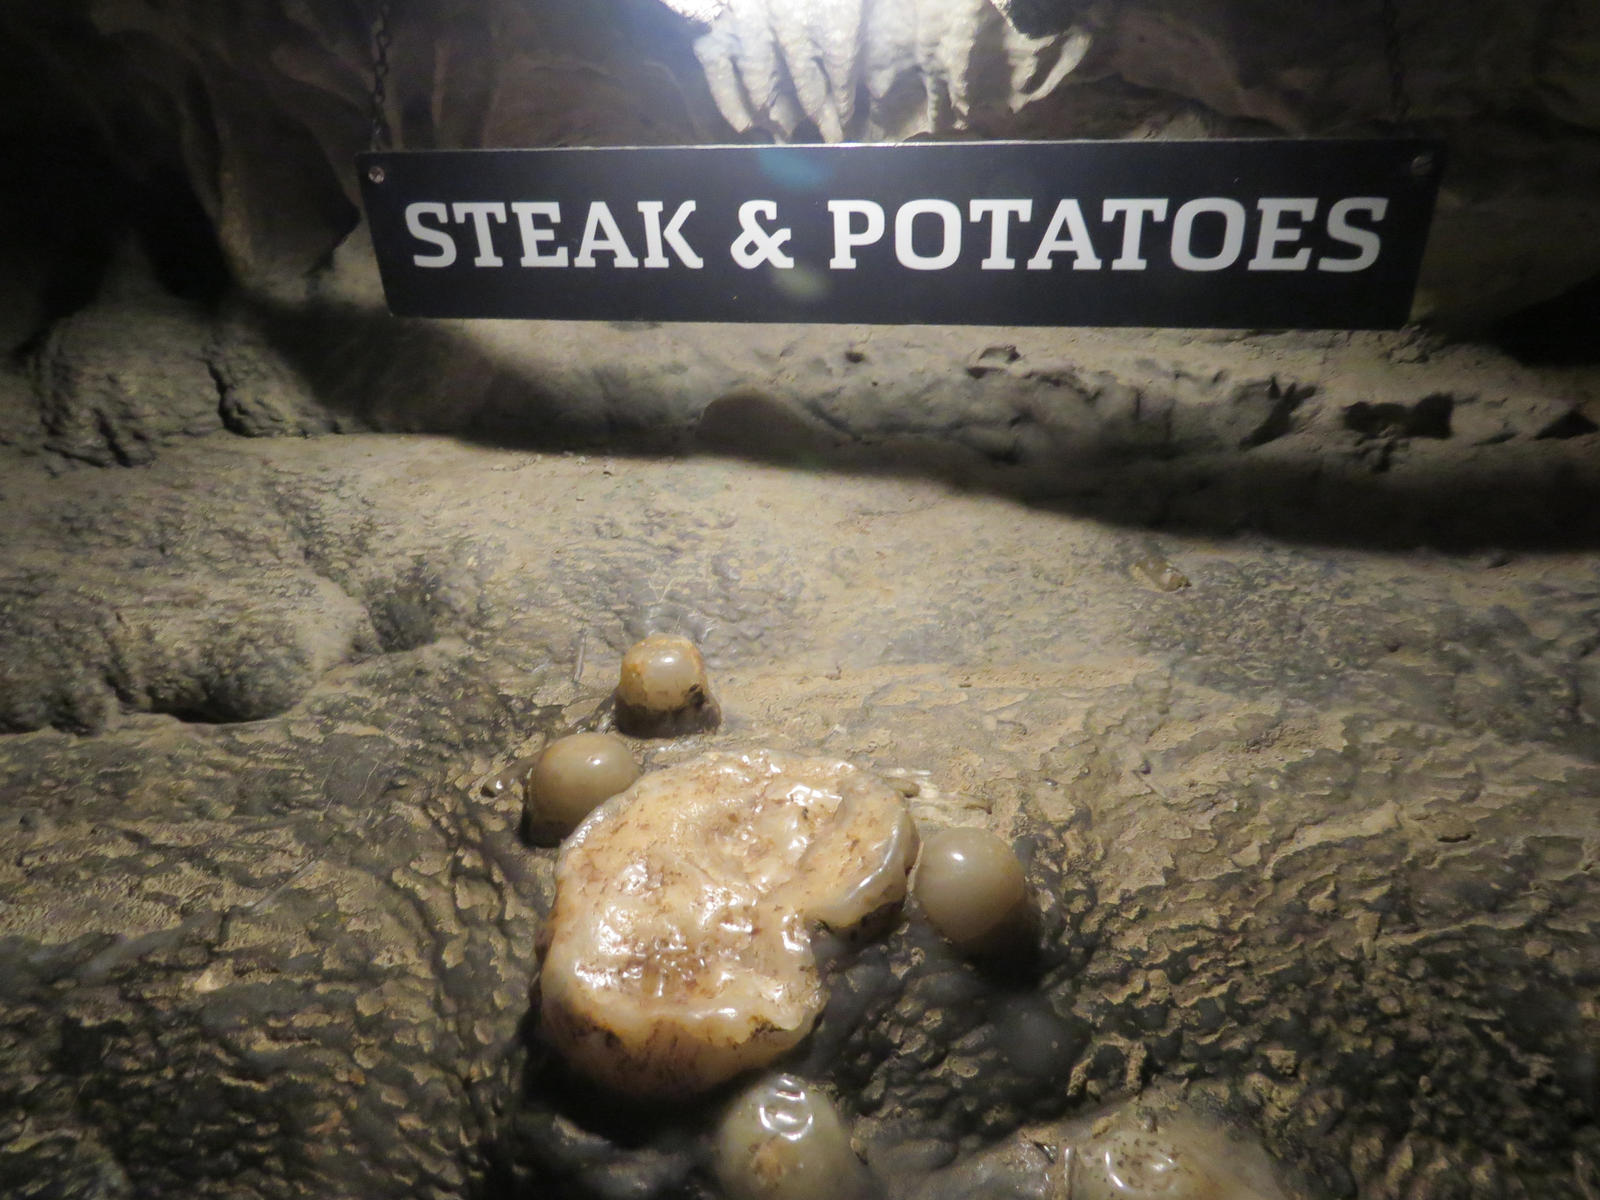 Steak and potatoes in Ruby Falls